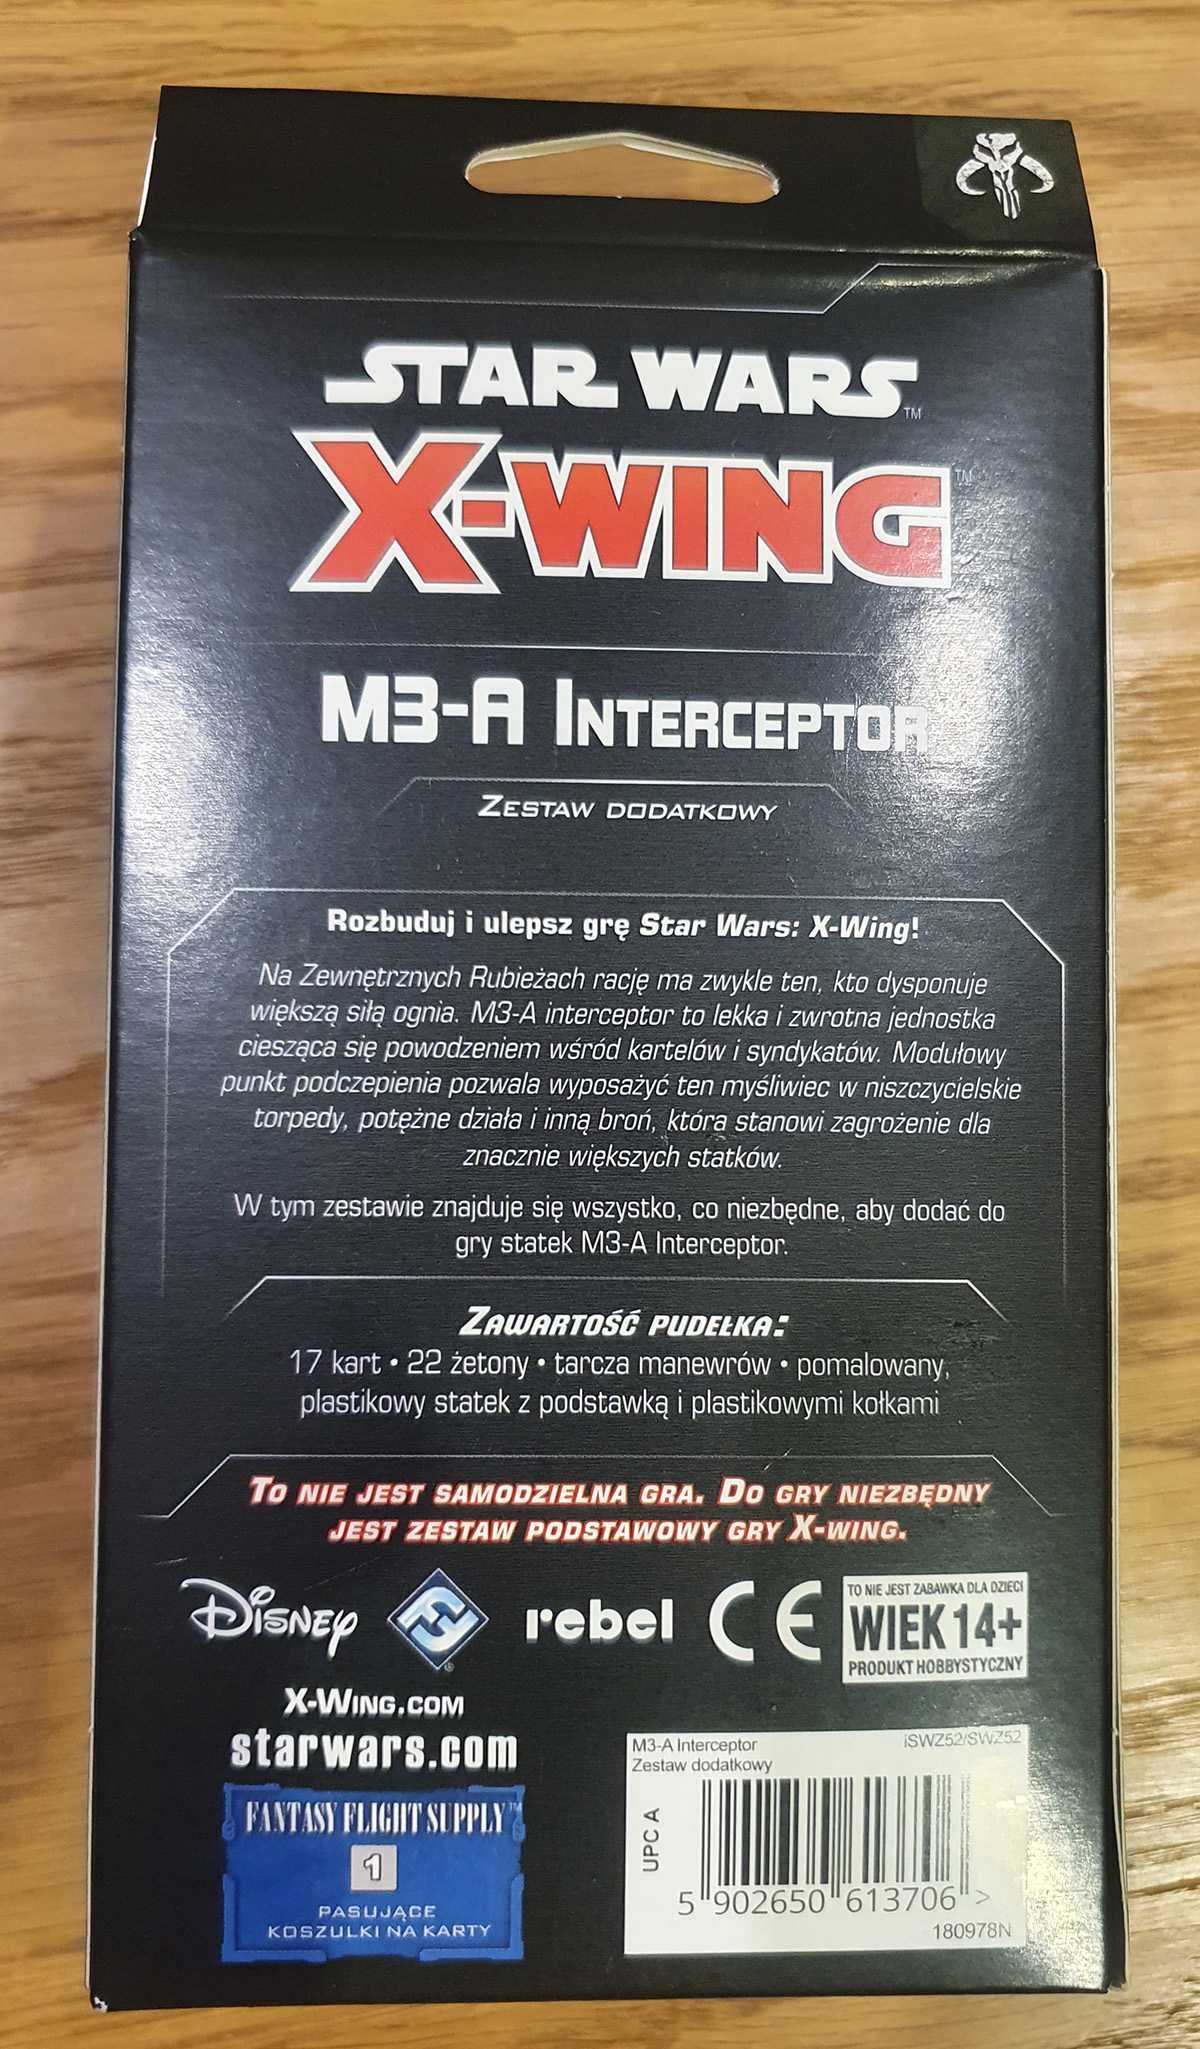 Star Wars: X-Wing - M3-A Interceptor (druga edycja) Rebel